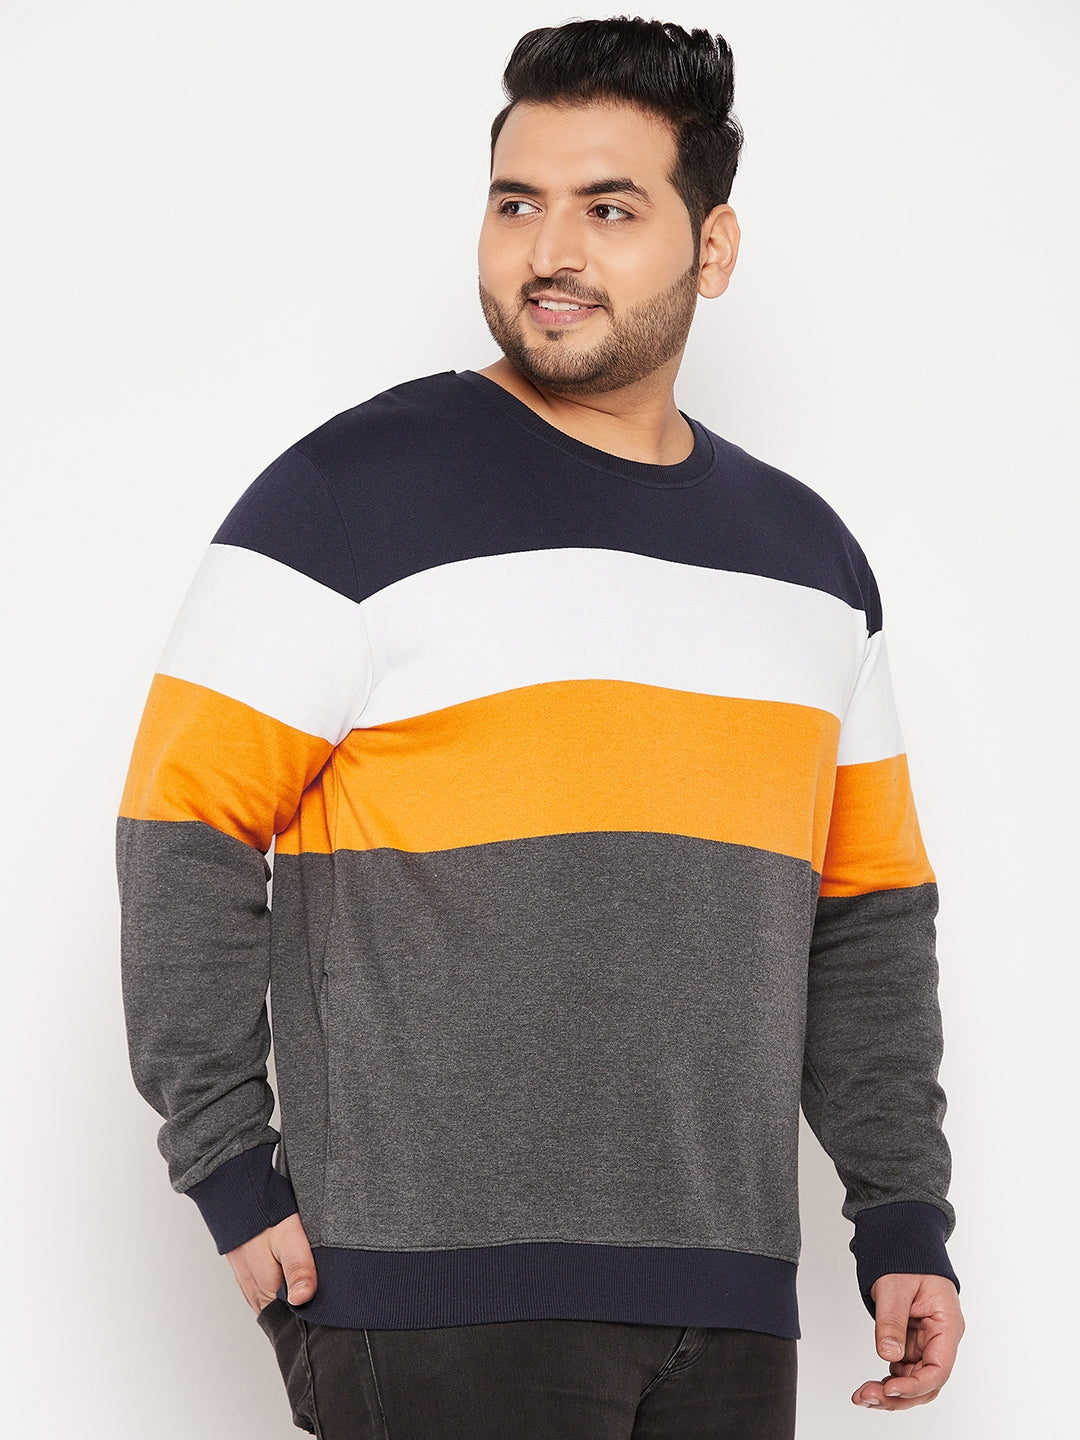 Austivo Men's Roundneck Sweatshirt